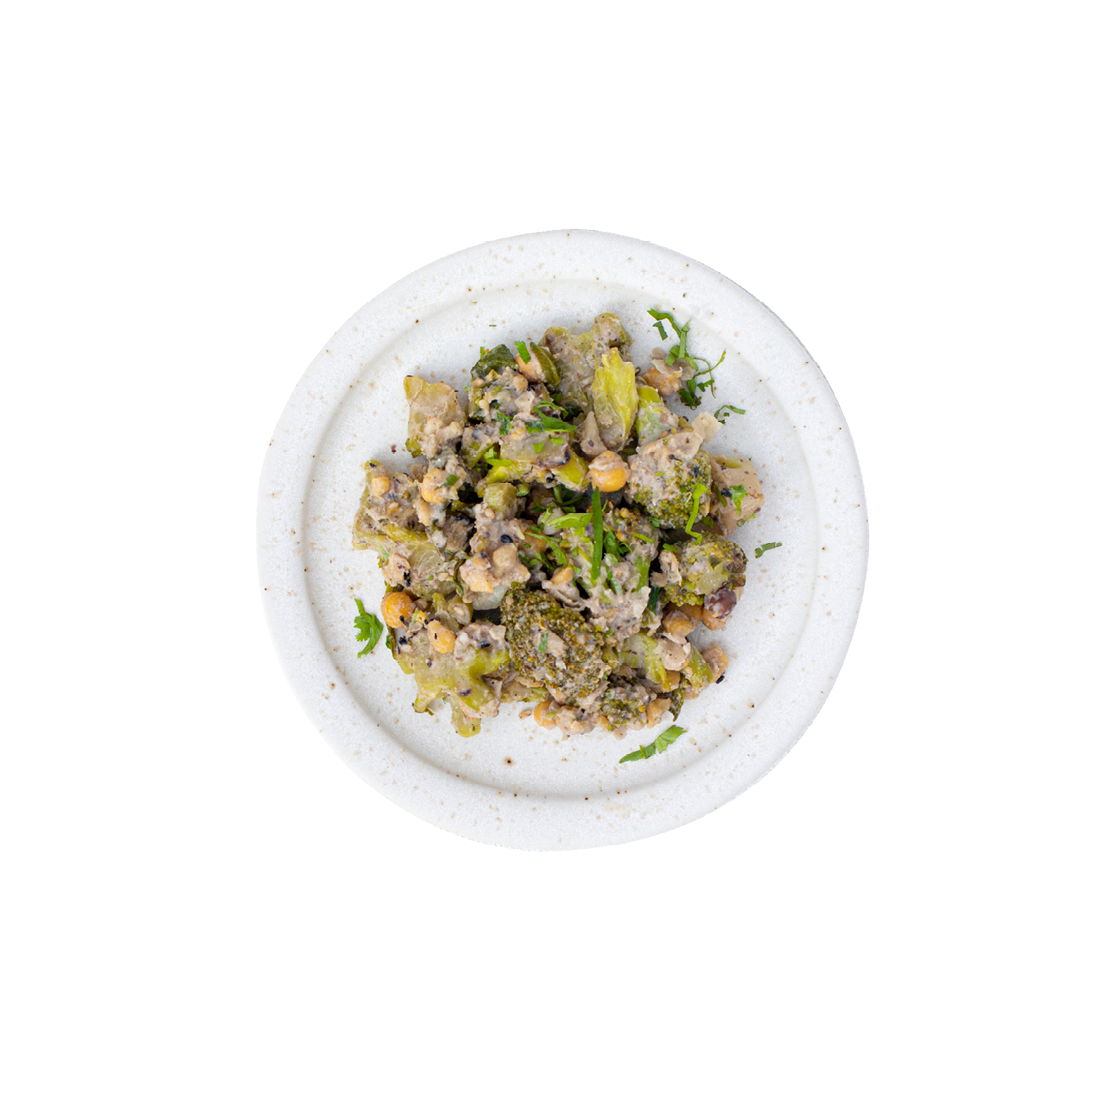 Broccoli & Chickpea Salad, Coconut Yogurt